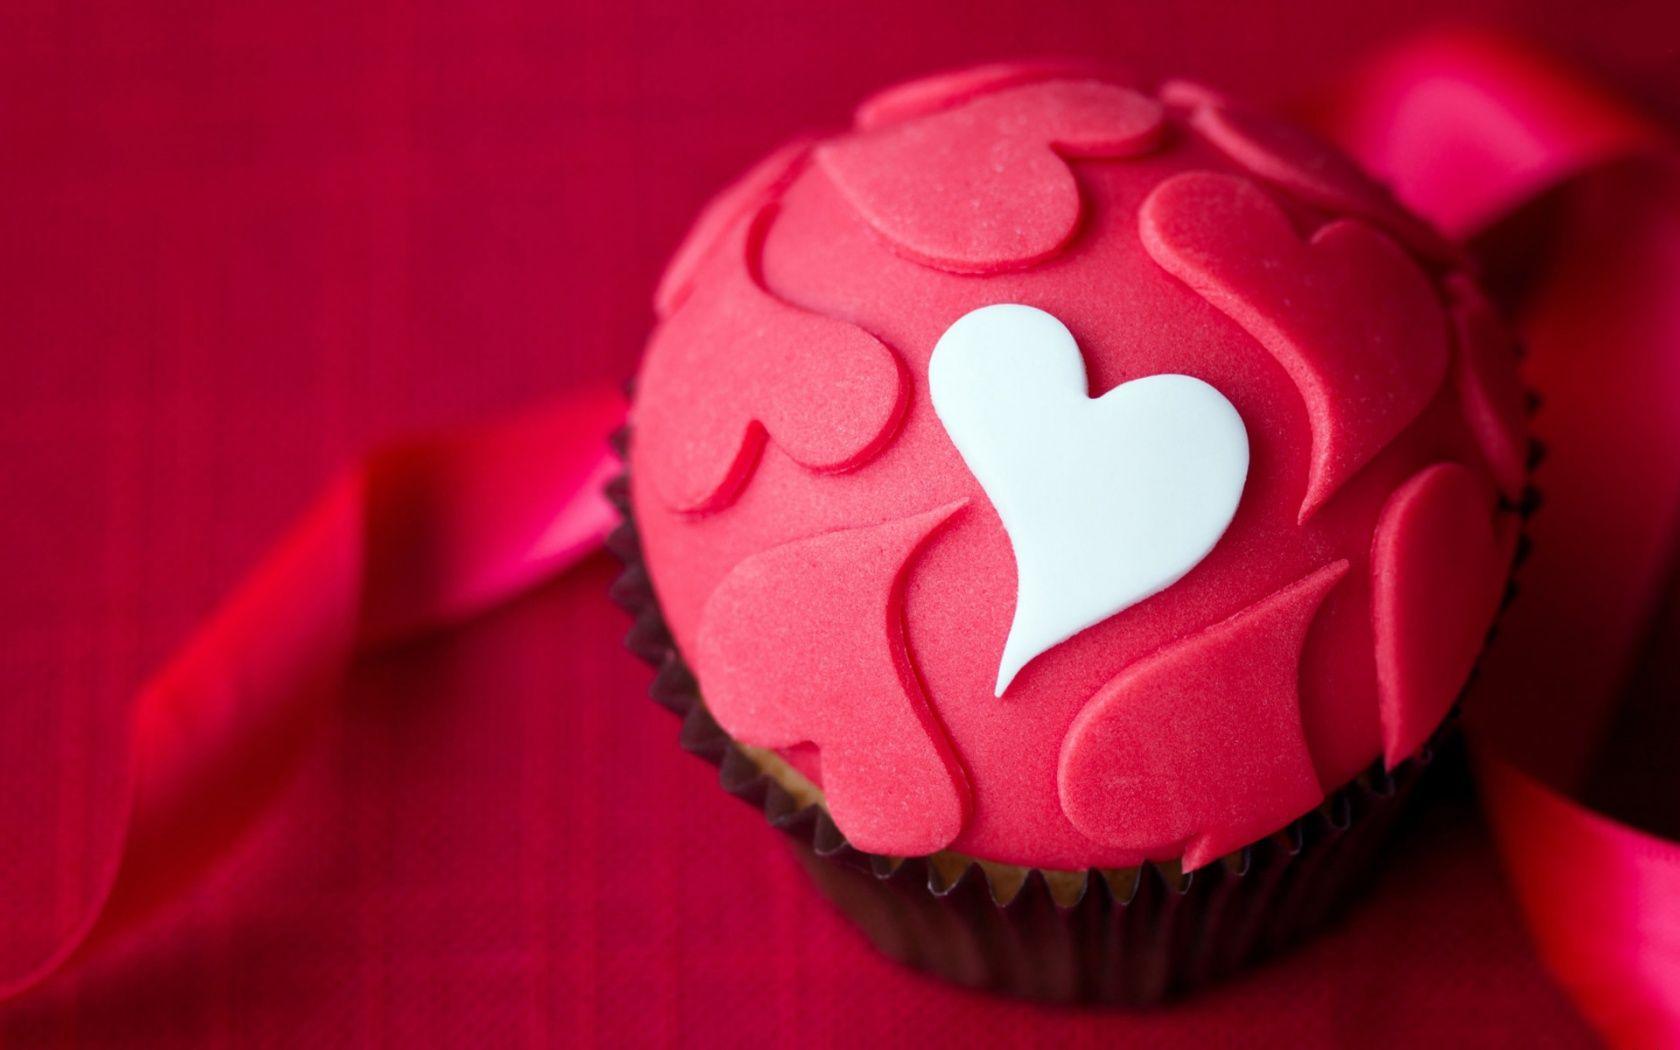 Love Cupcake Wallpaper in jpg format for free download